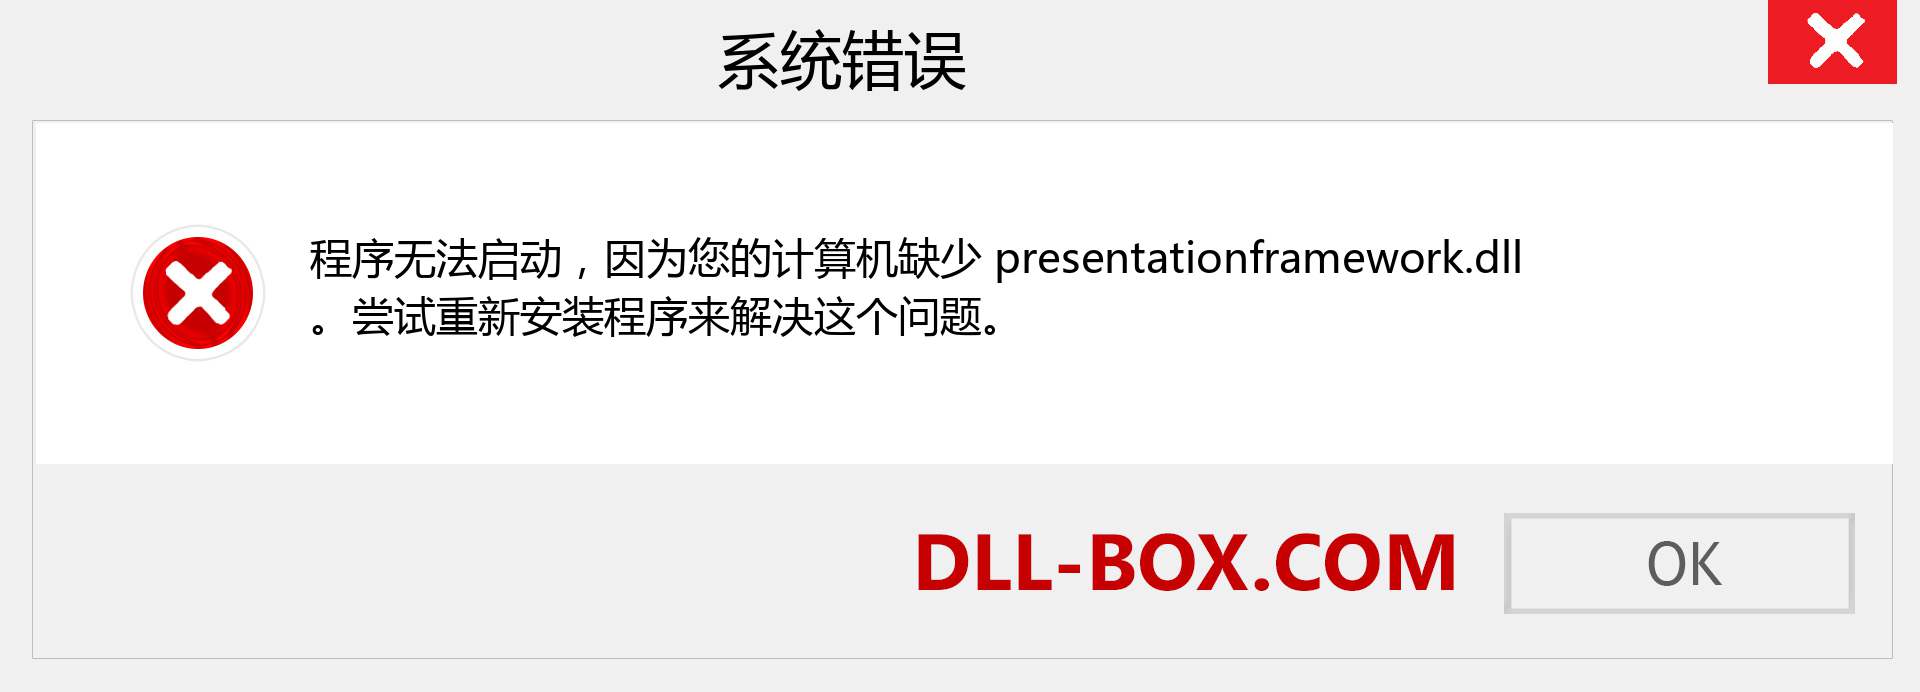 presentationframework.dll 文件丢失？。 适用于 Windows 7、8、10 的下载 - 修复 Windows、照片、图像上的 presentationframework dll 丢失错误